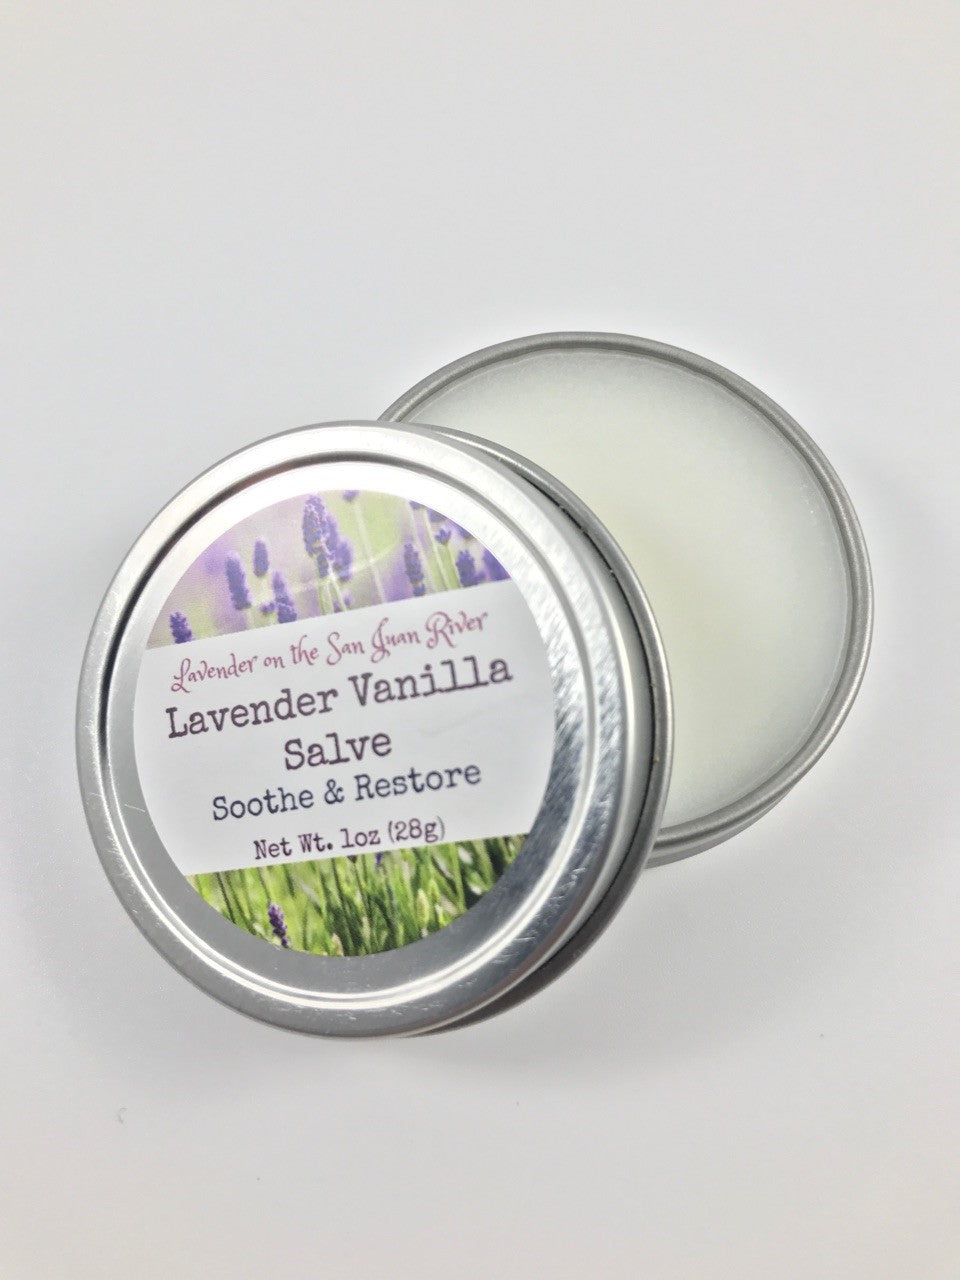 Lavender Vanilla Salve